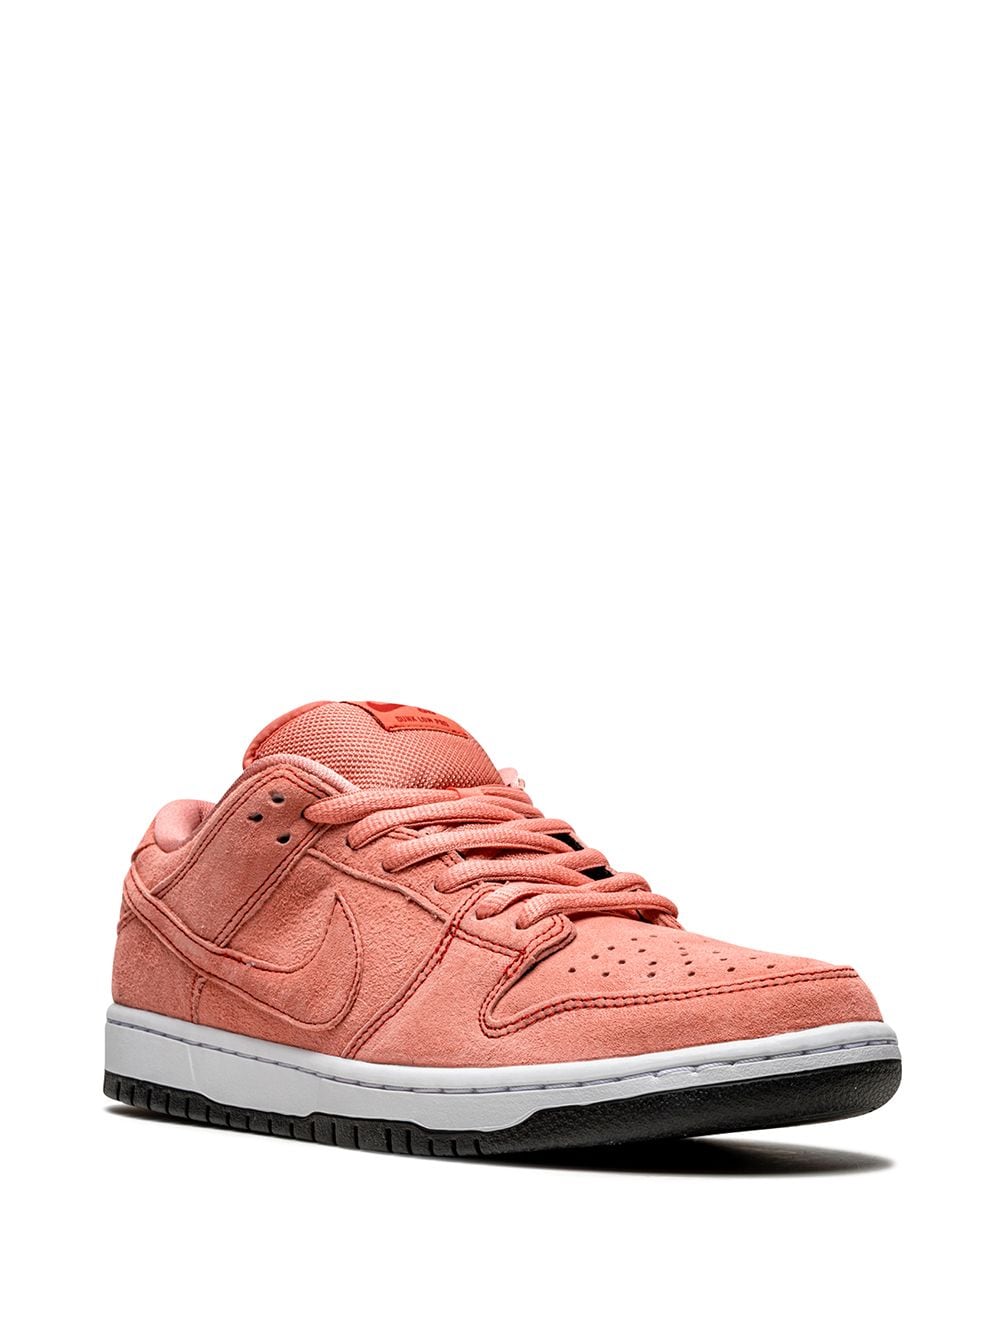 Nike Sb Dunk Low Pro Sneakers In Pink